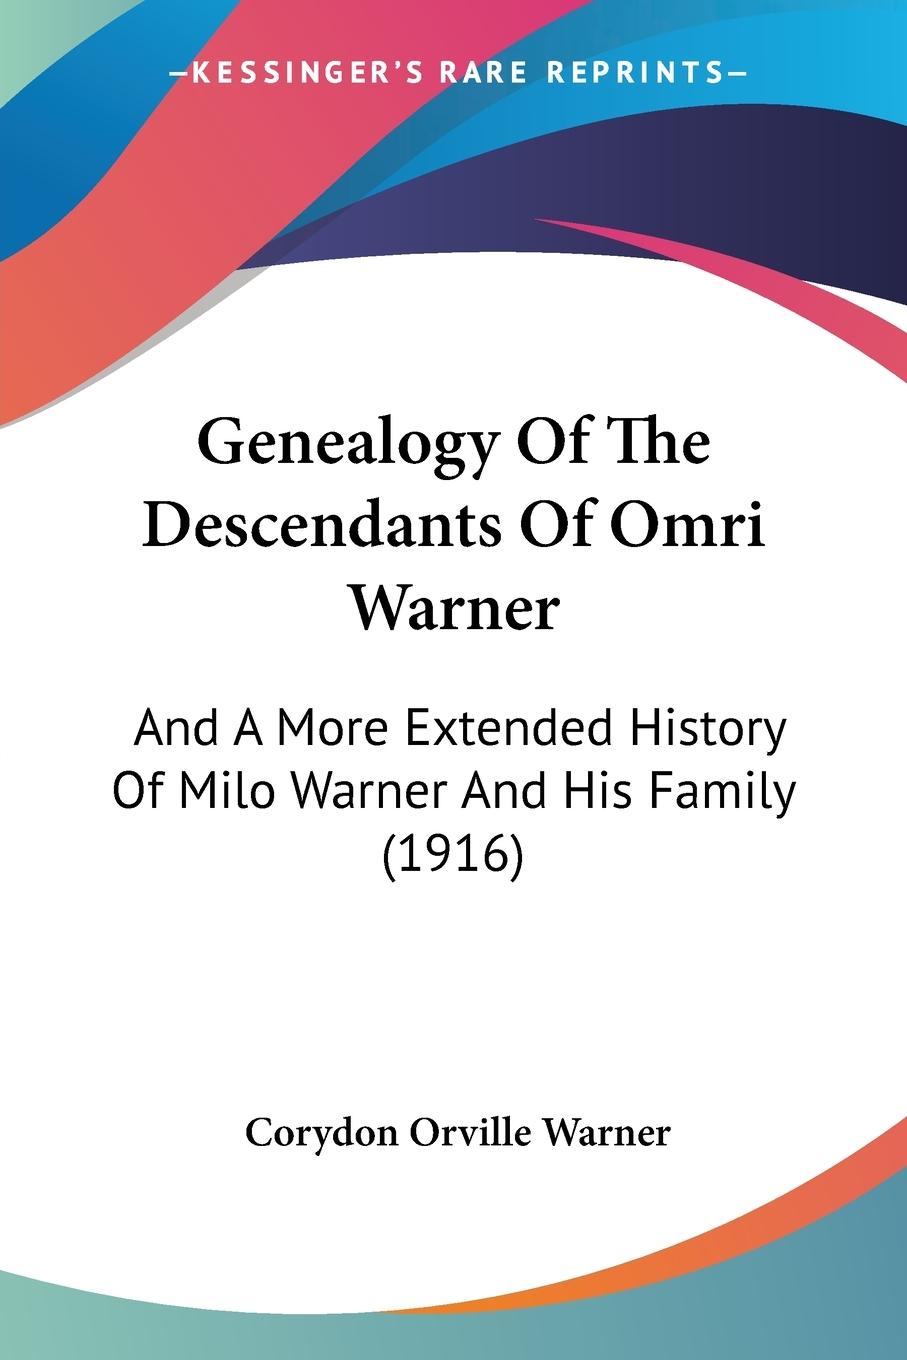 Genealogy Of The Descendants Of Omri Warner - Warner, Corydon Orville